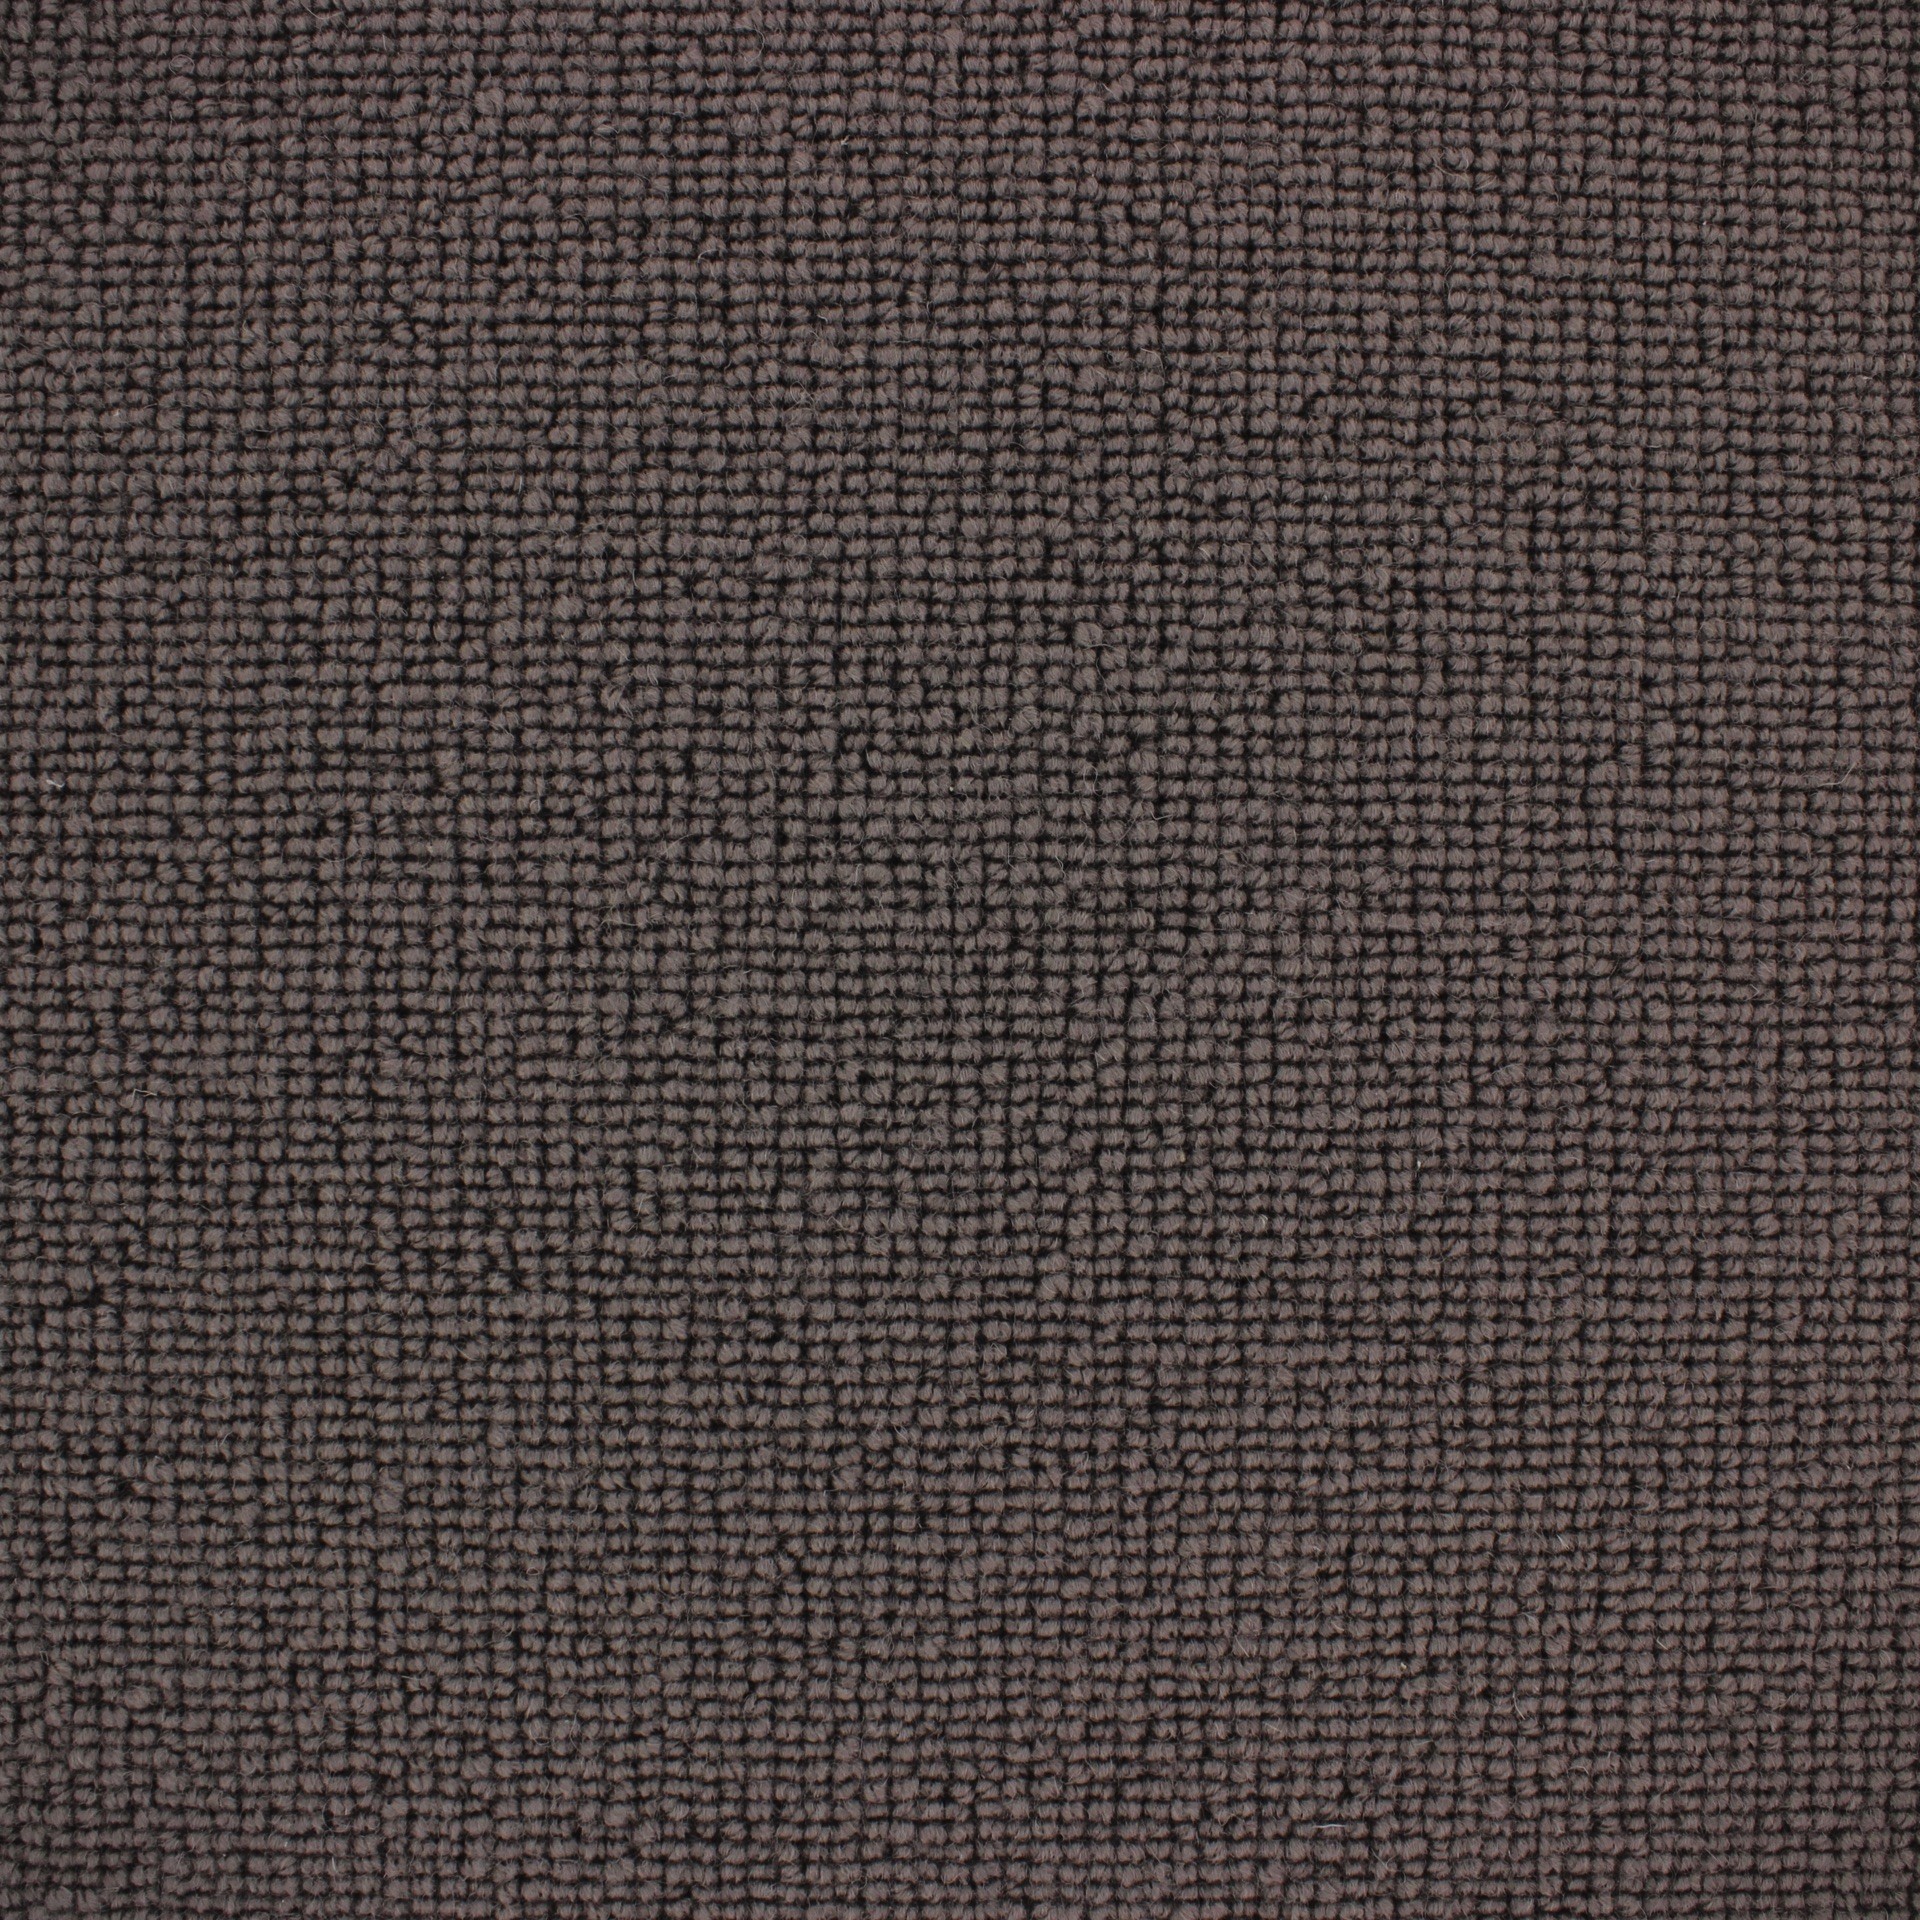 Telenzo Chelsea Ash Wool Carpet